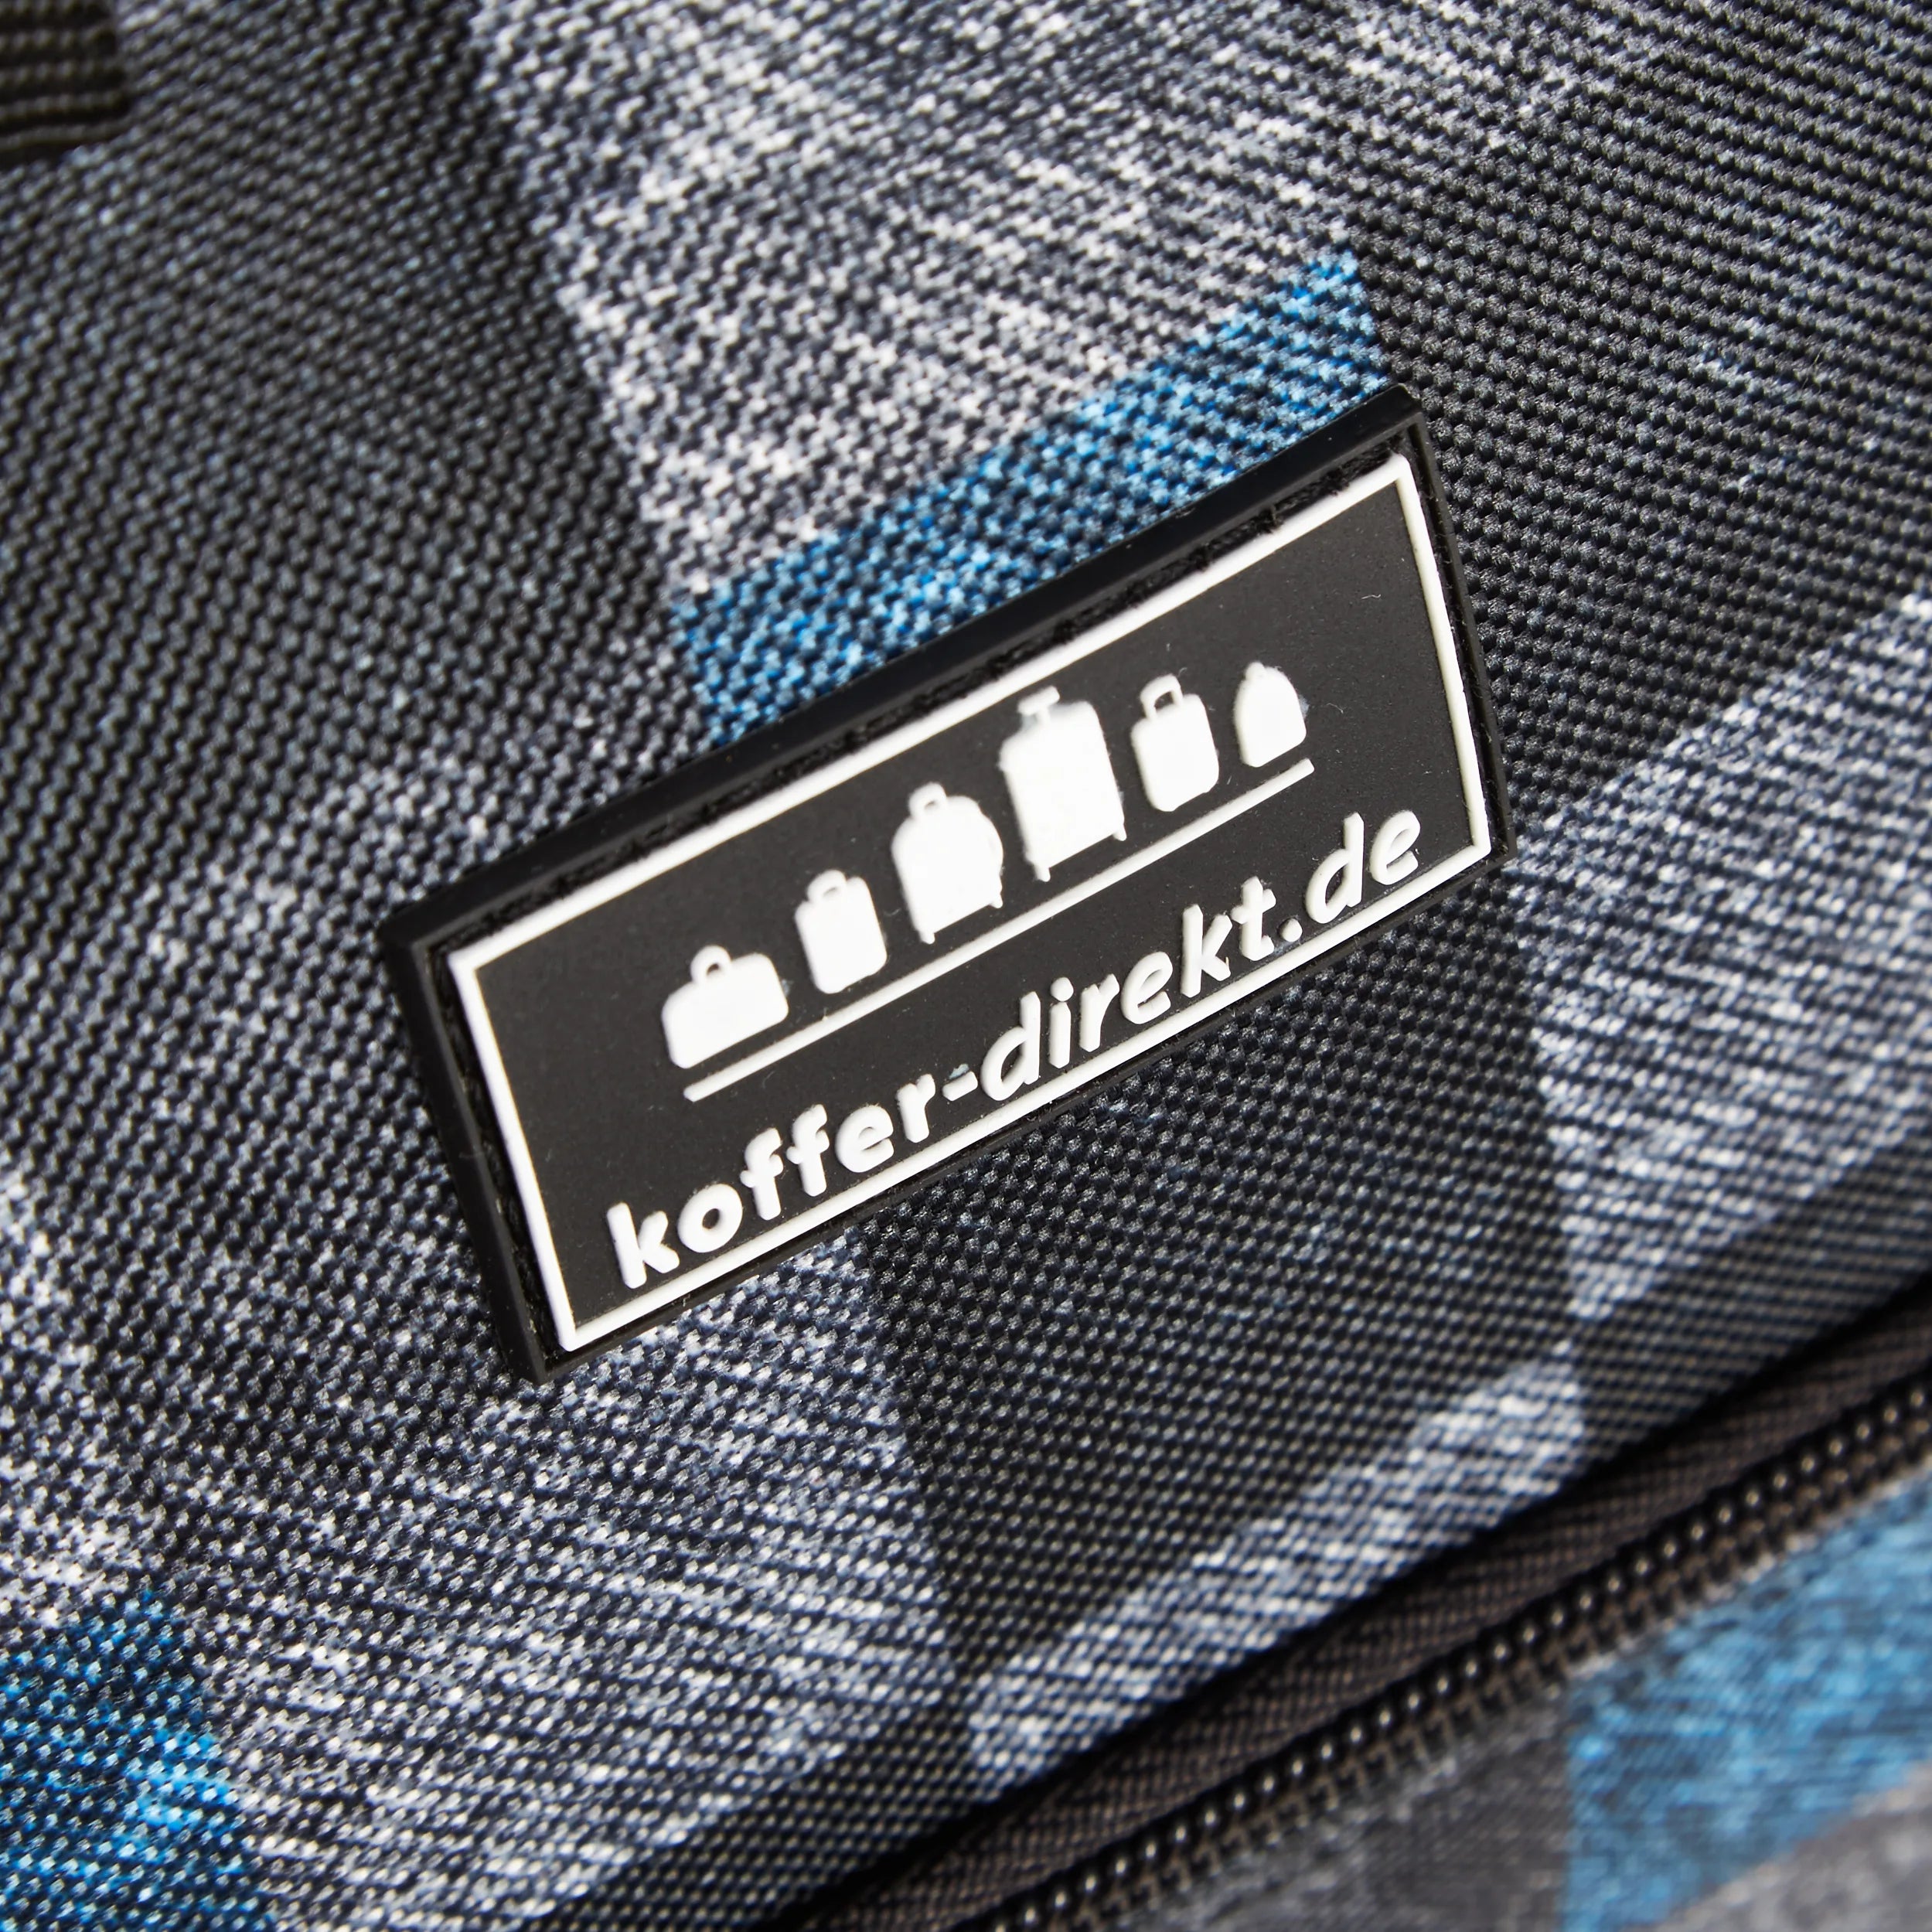 koffer-direkt.de Two Travel II Travel bag 50 cm - blue stripe